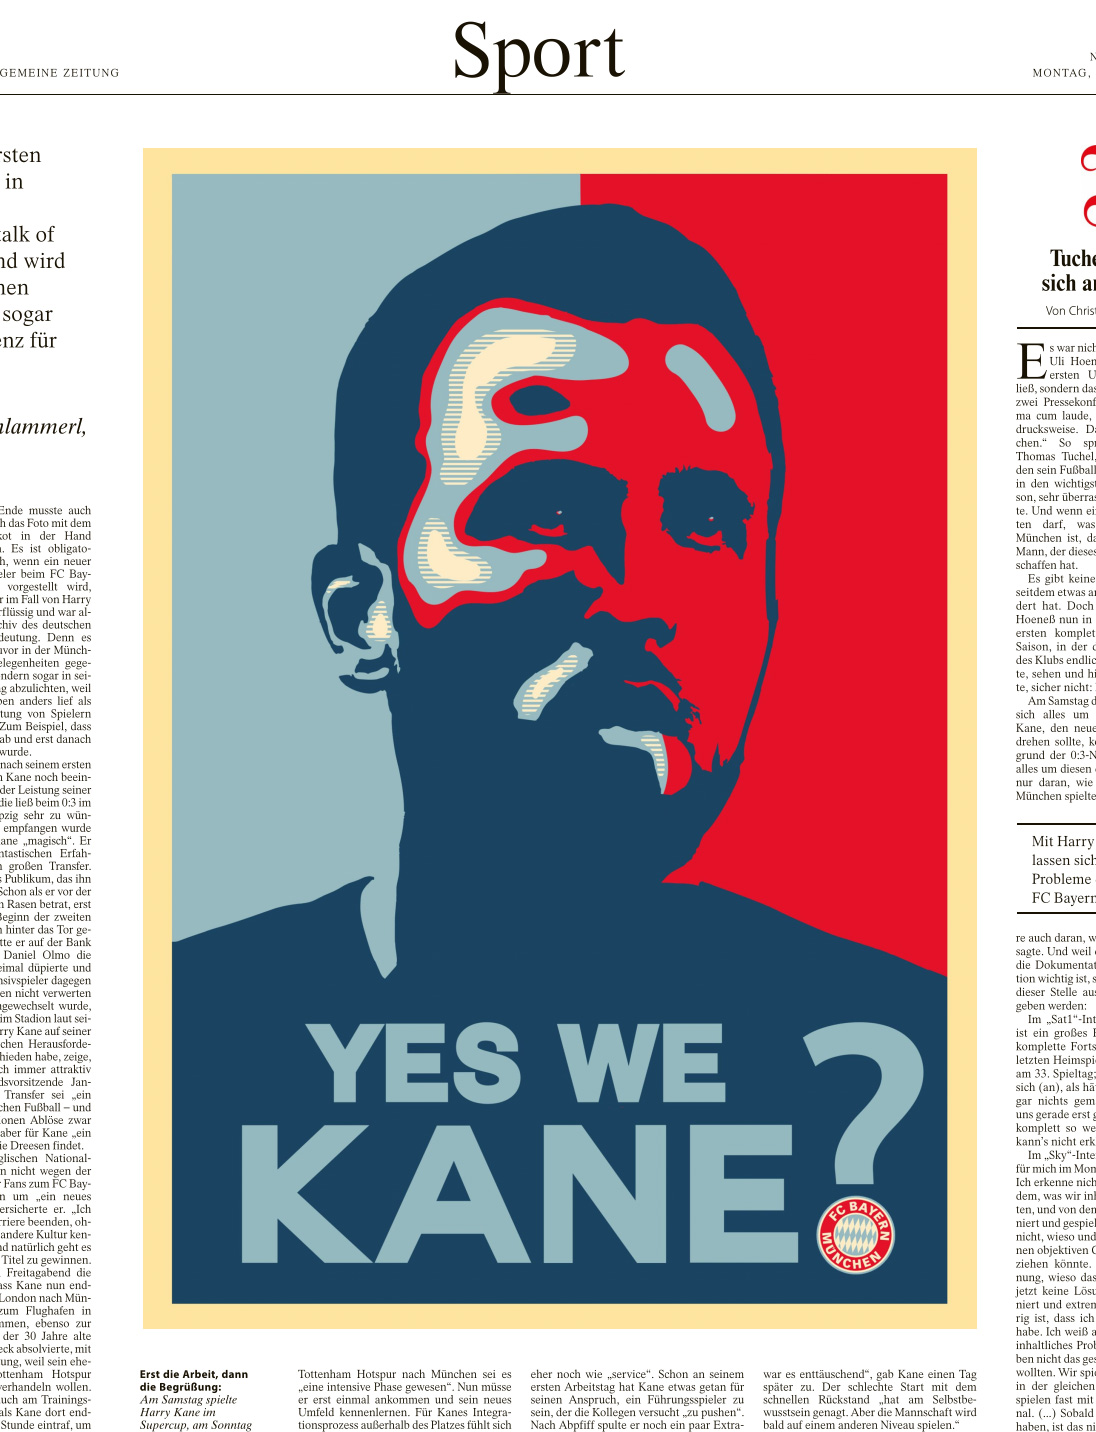 Grafik in der F.A.Z.: „Yes we Kane?“